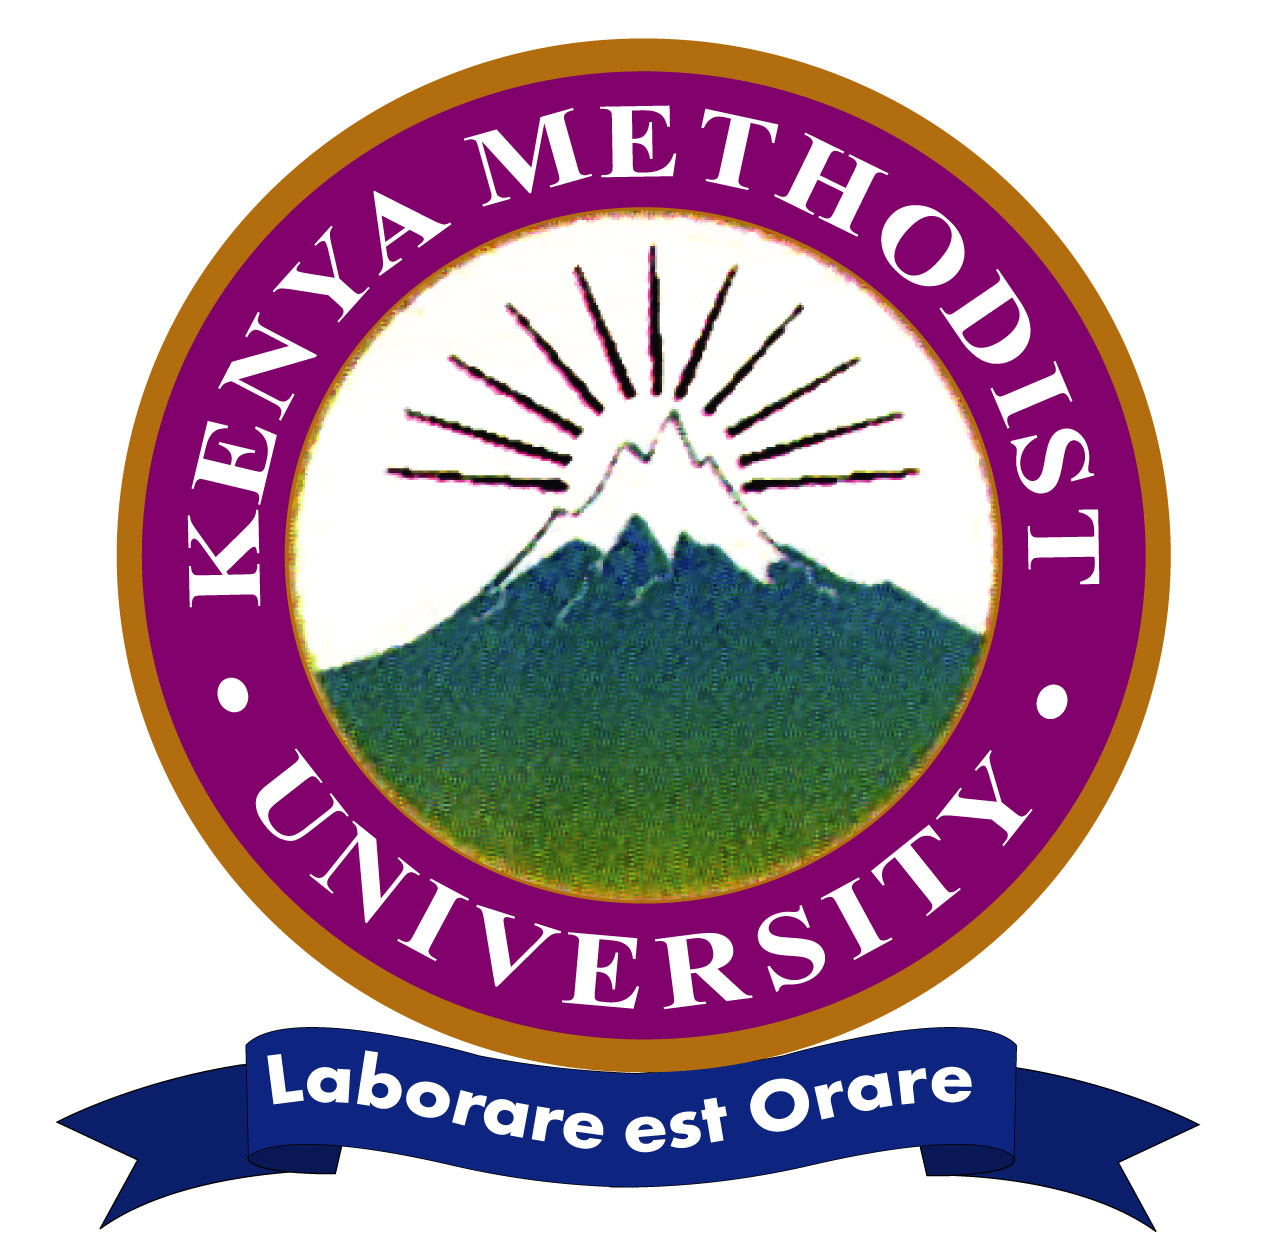 Kenya Methodist University Development Association logo